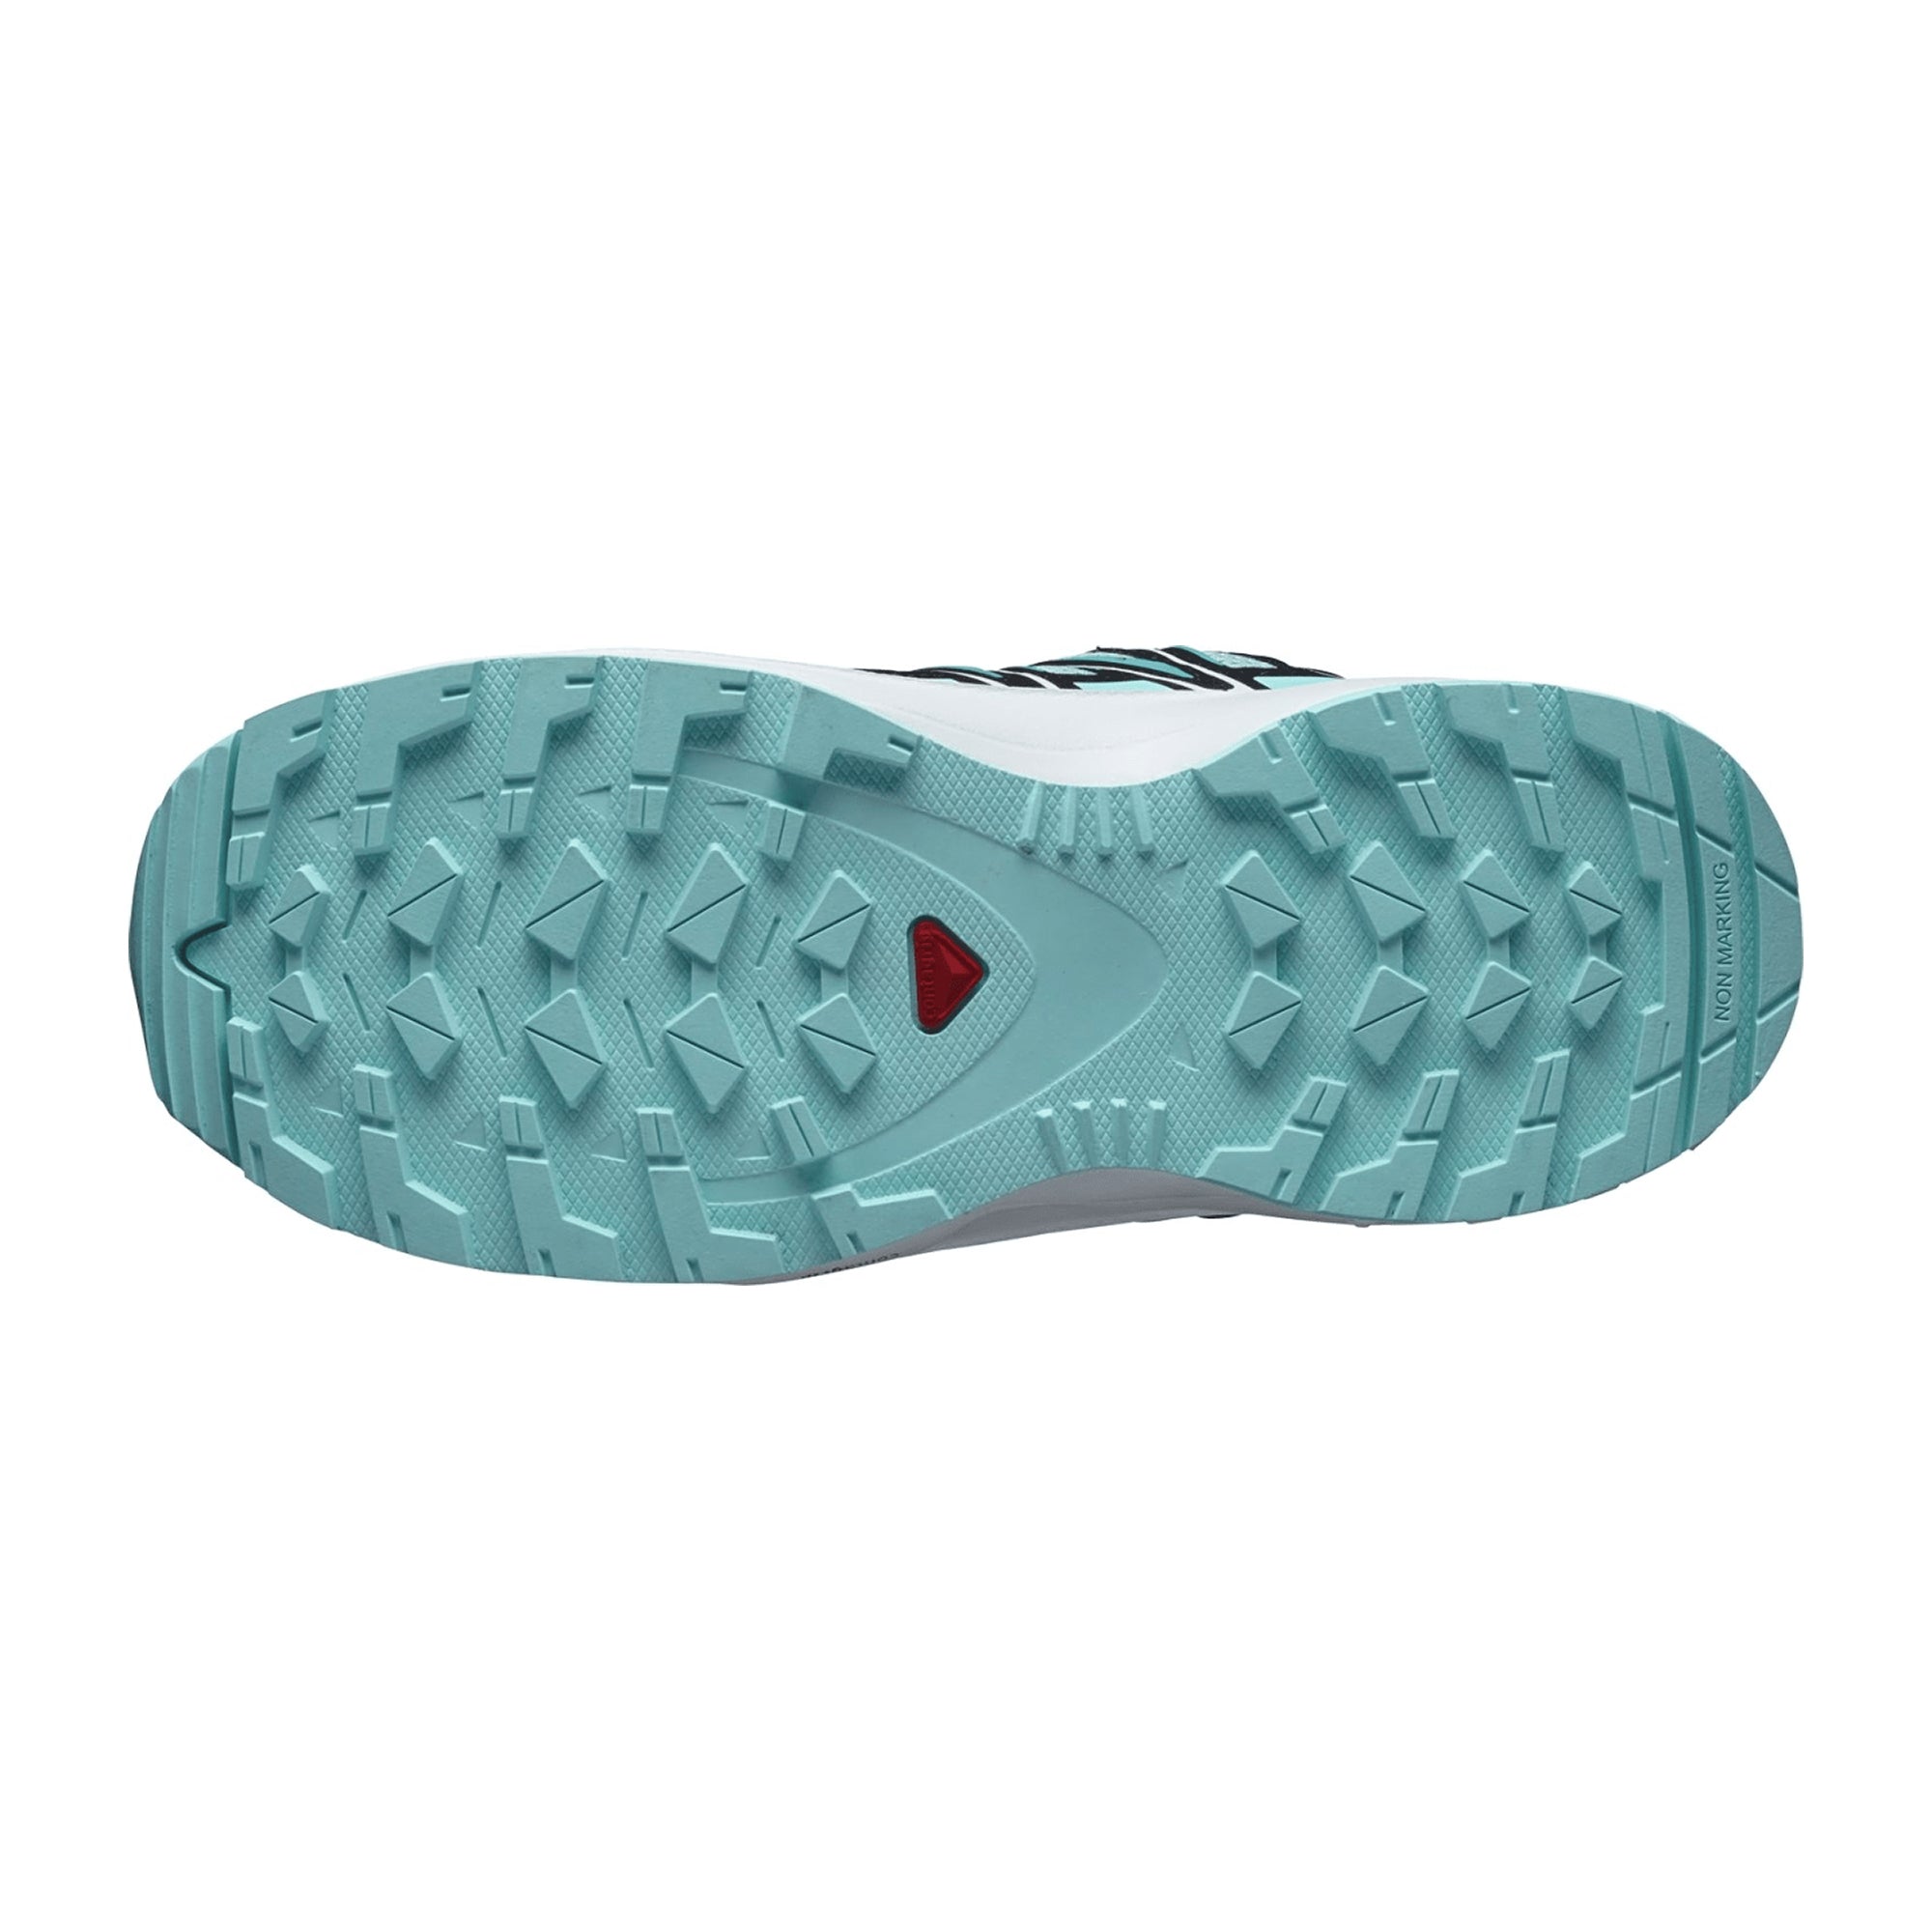 Salomon shoes XA PRO 3D CSWP J Pastel for children, turquoise